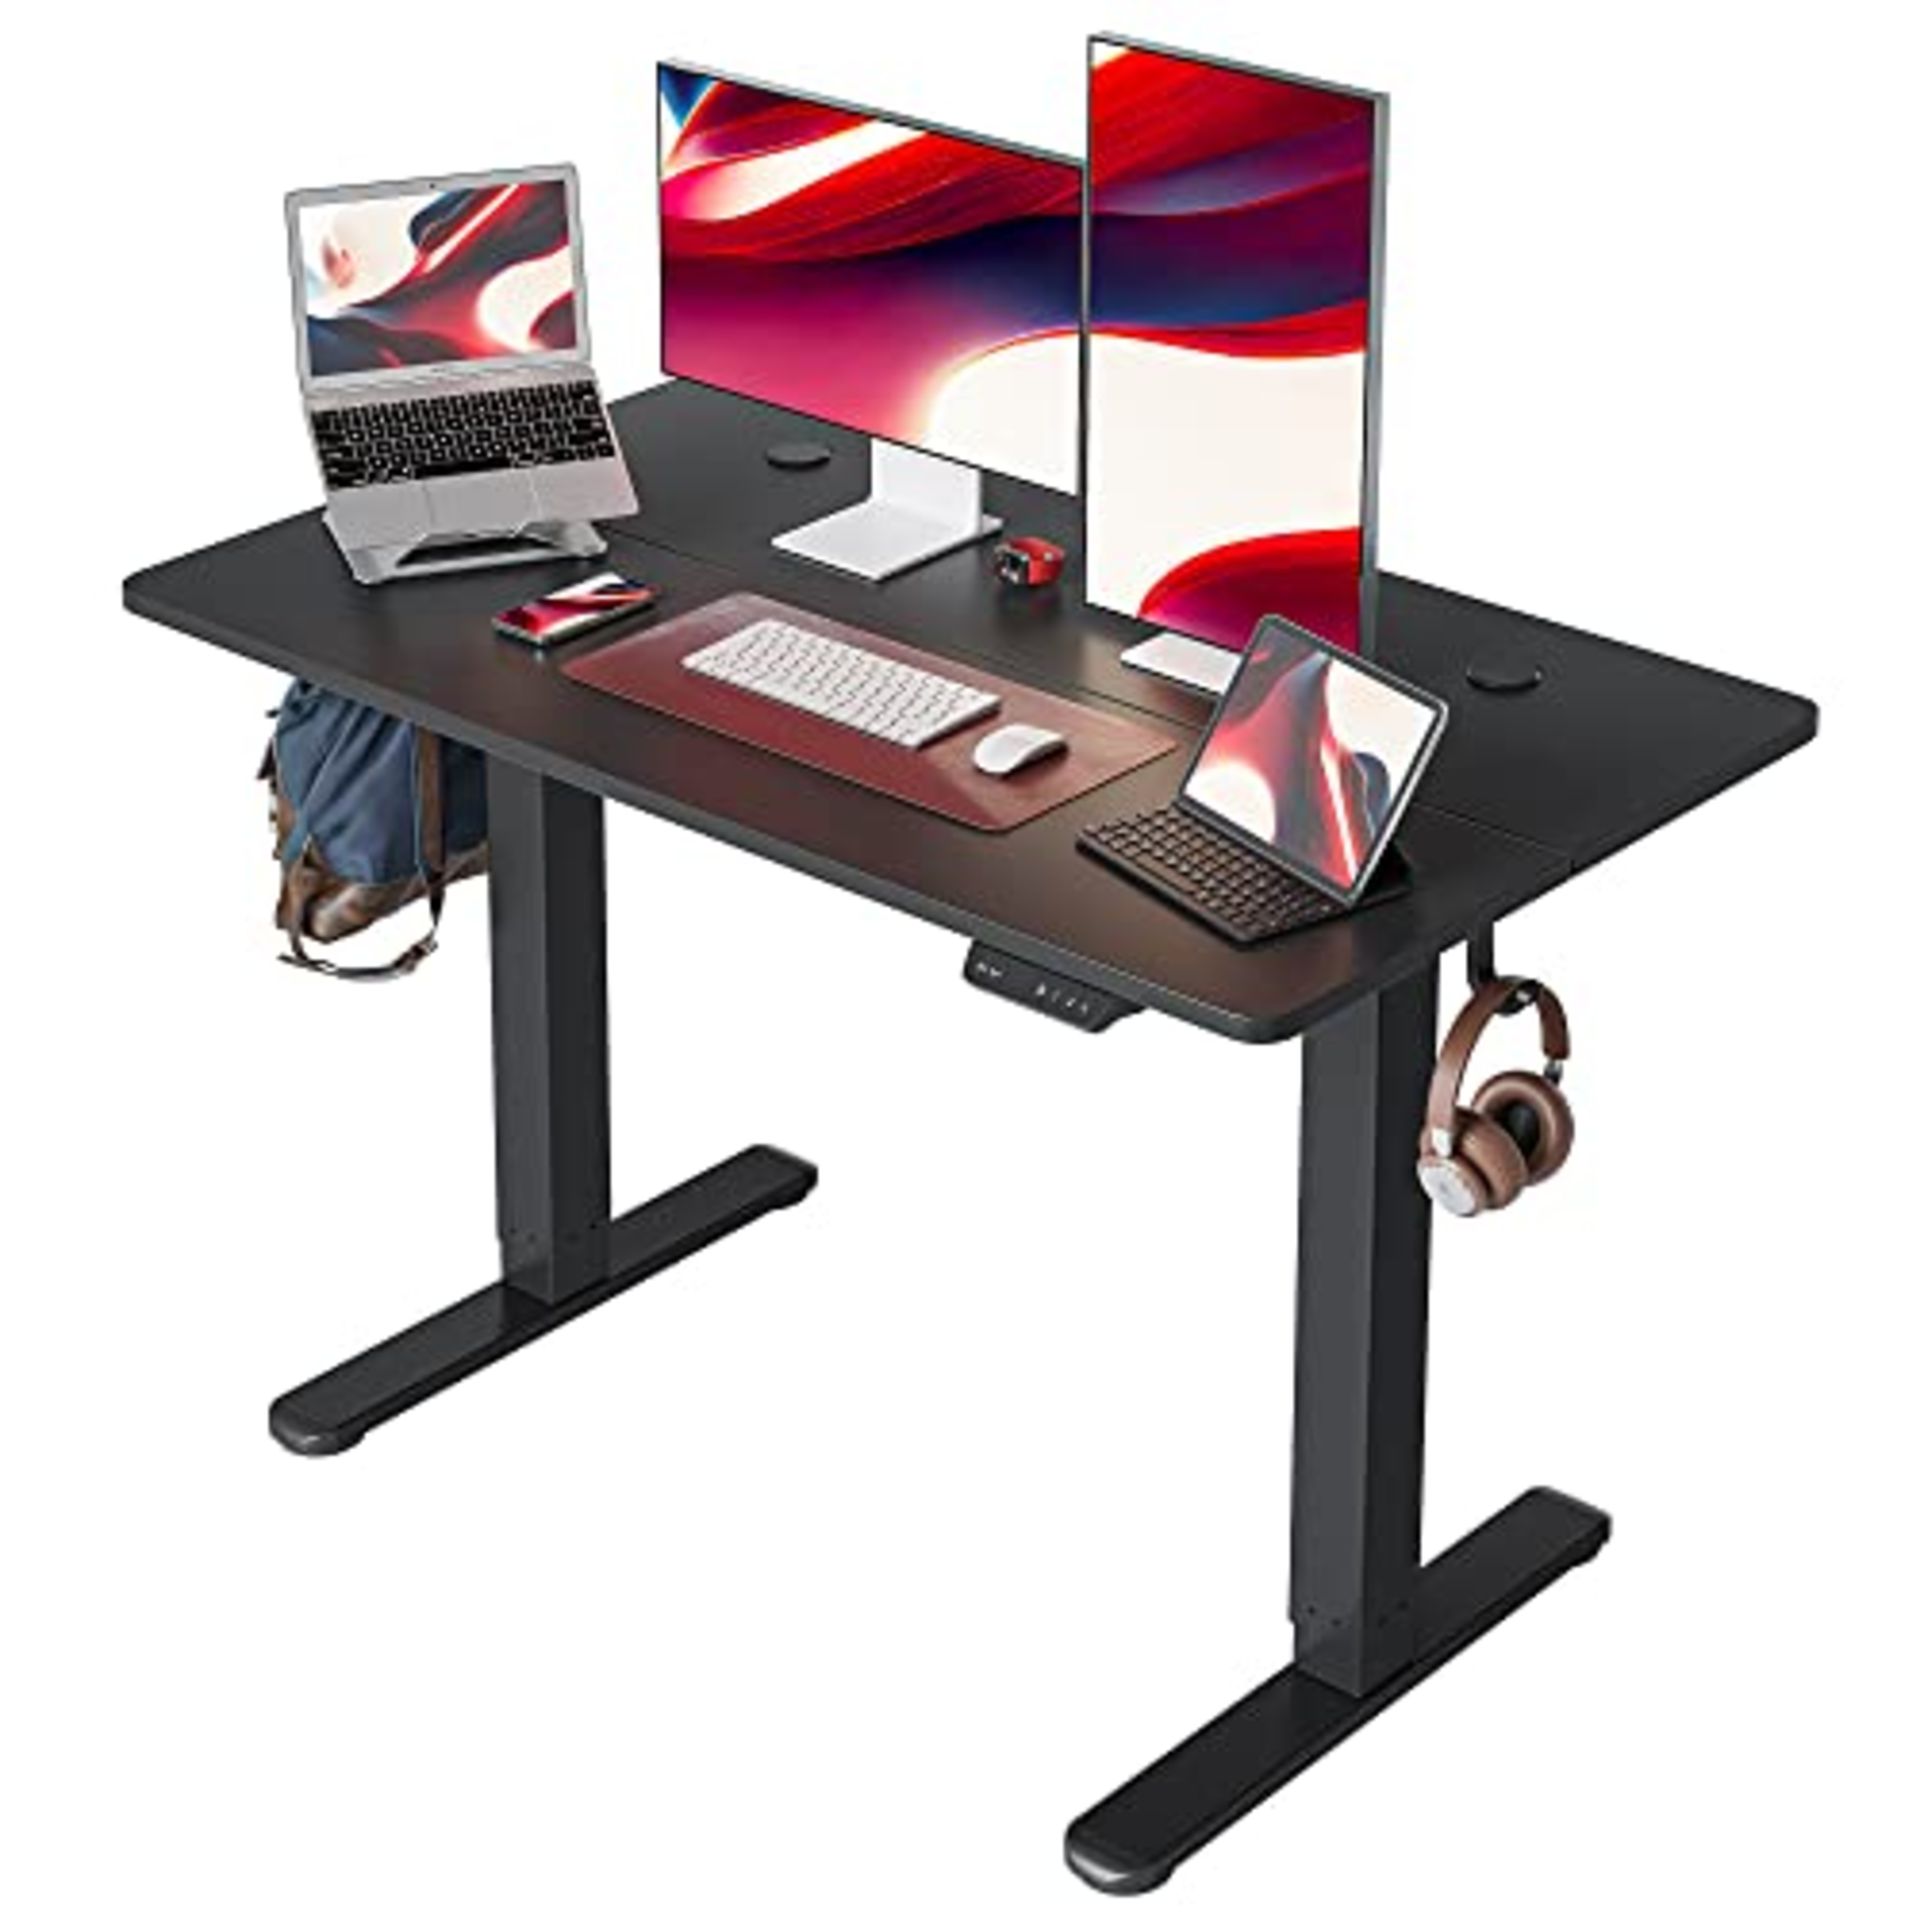 RRP £133.99 Cubiker Standing Desk Height Adjustable Electric Desk